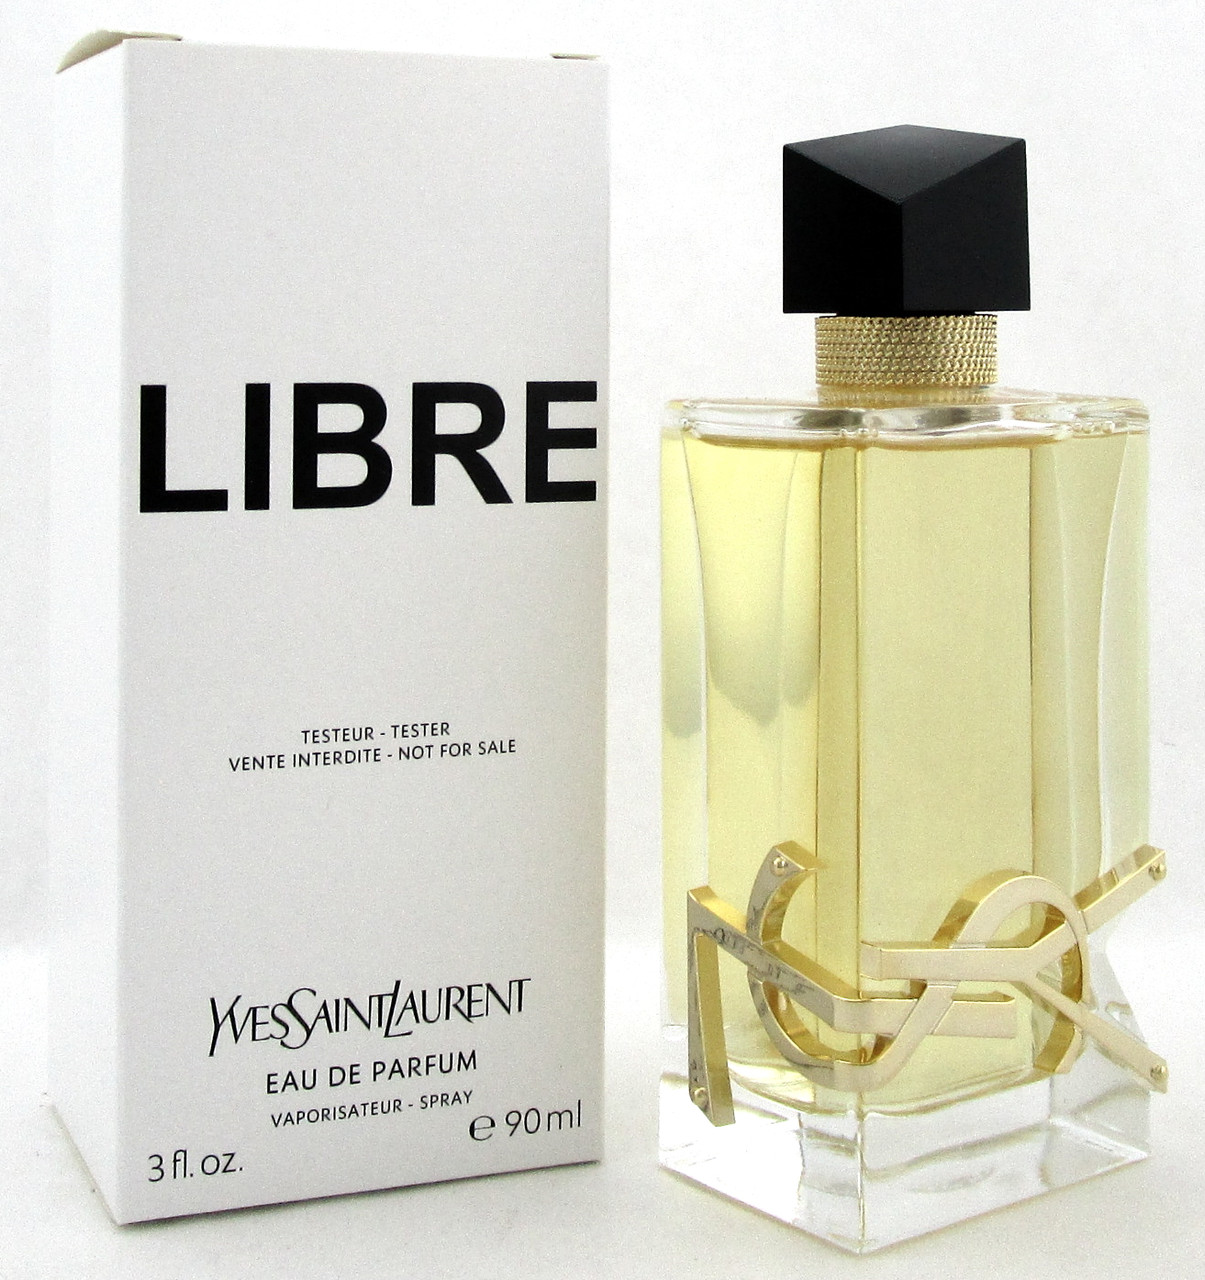 LIBRE Perfume by Yves Saint Laurent 3.0 oz. EDP Spray for Women. New